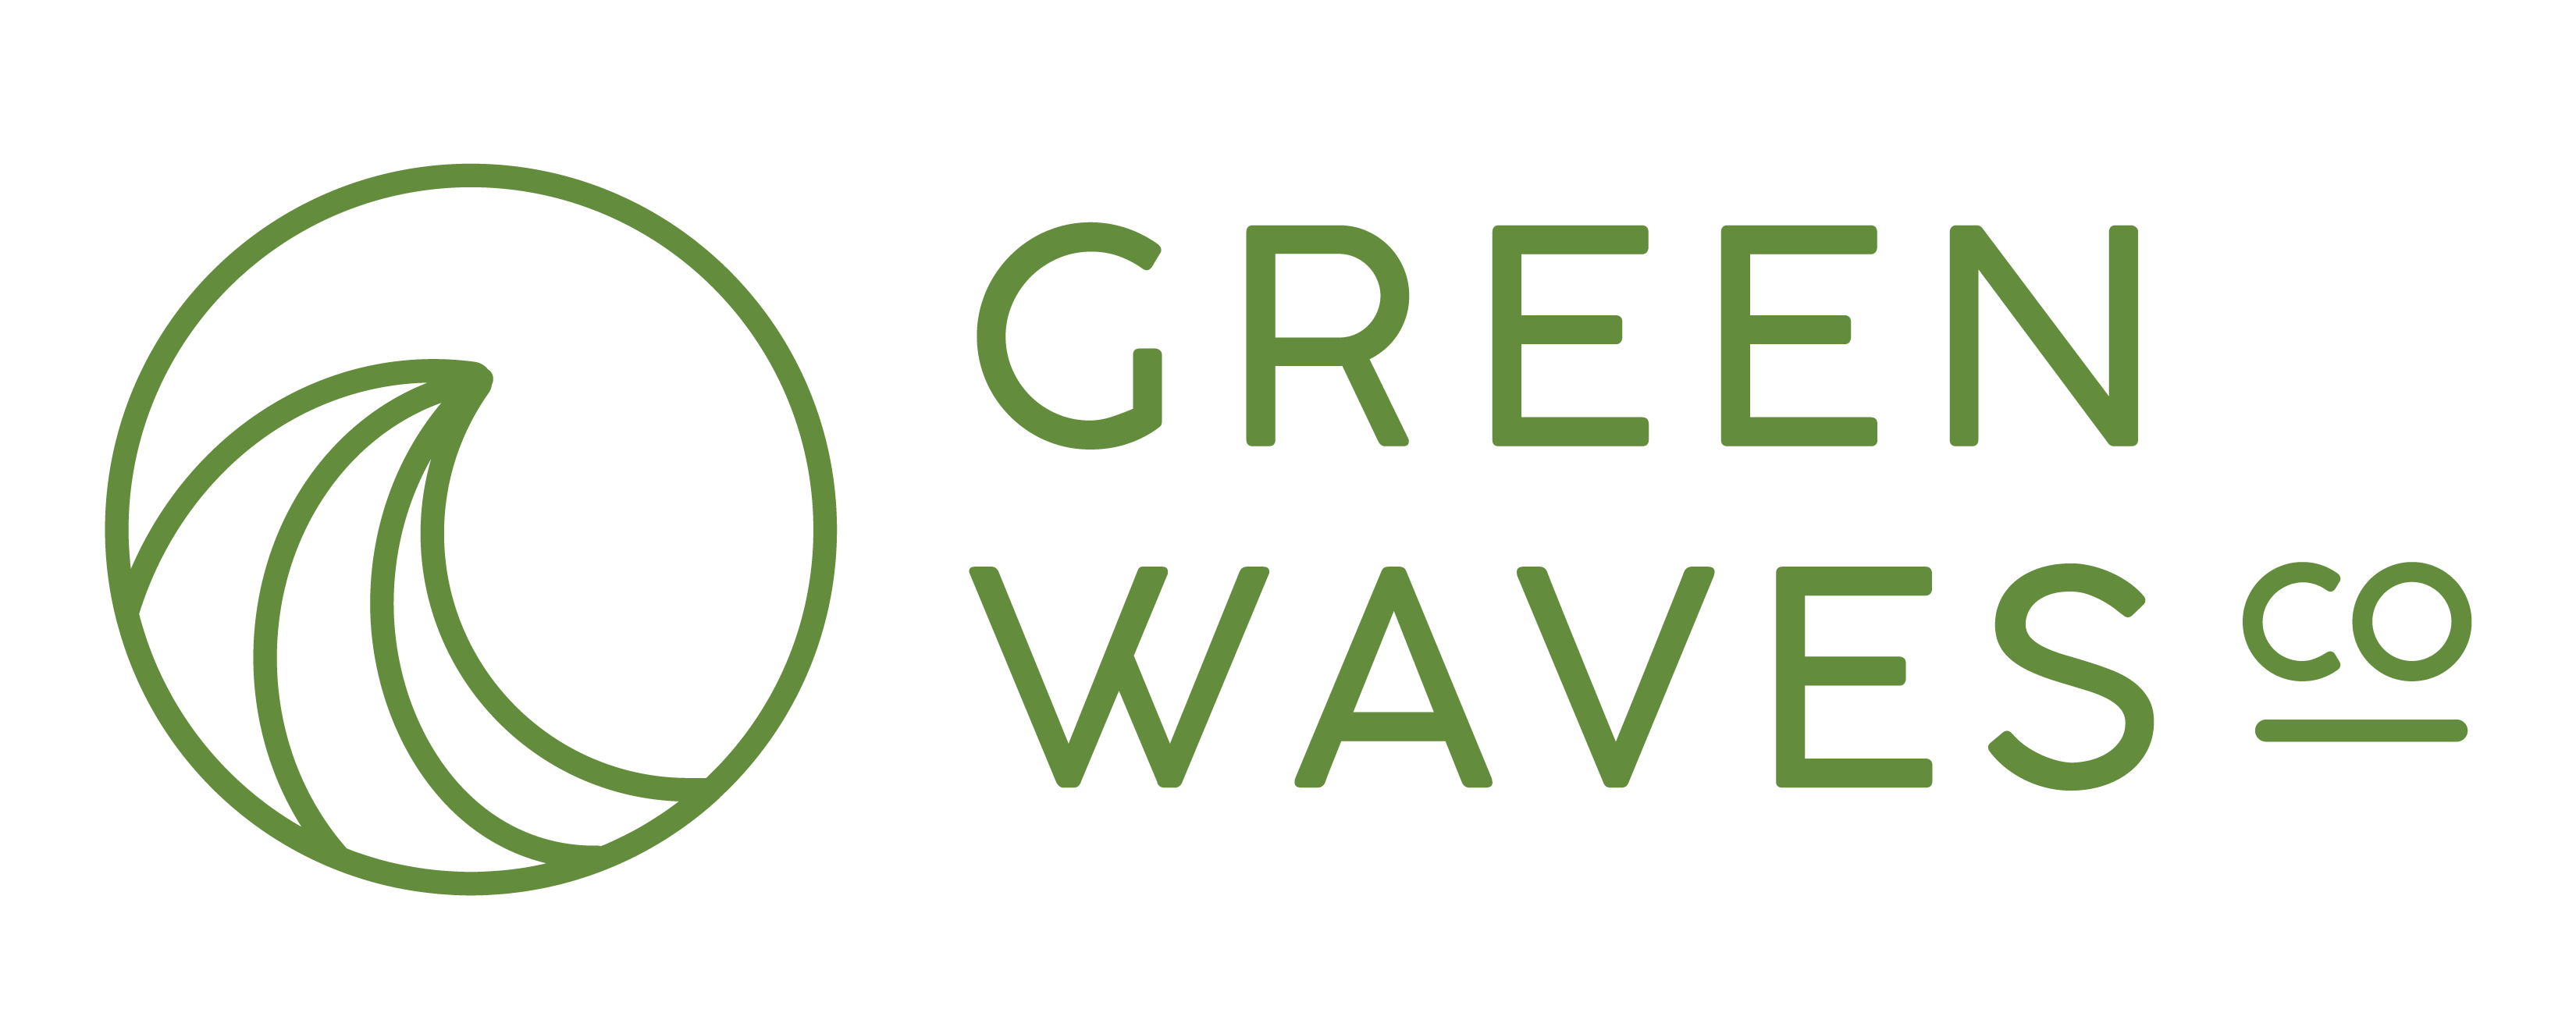 Green Waves Co. Logo